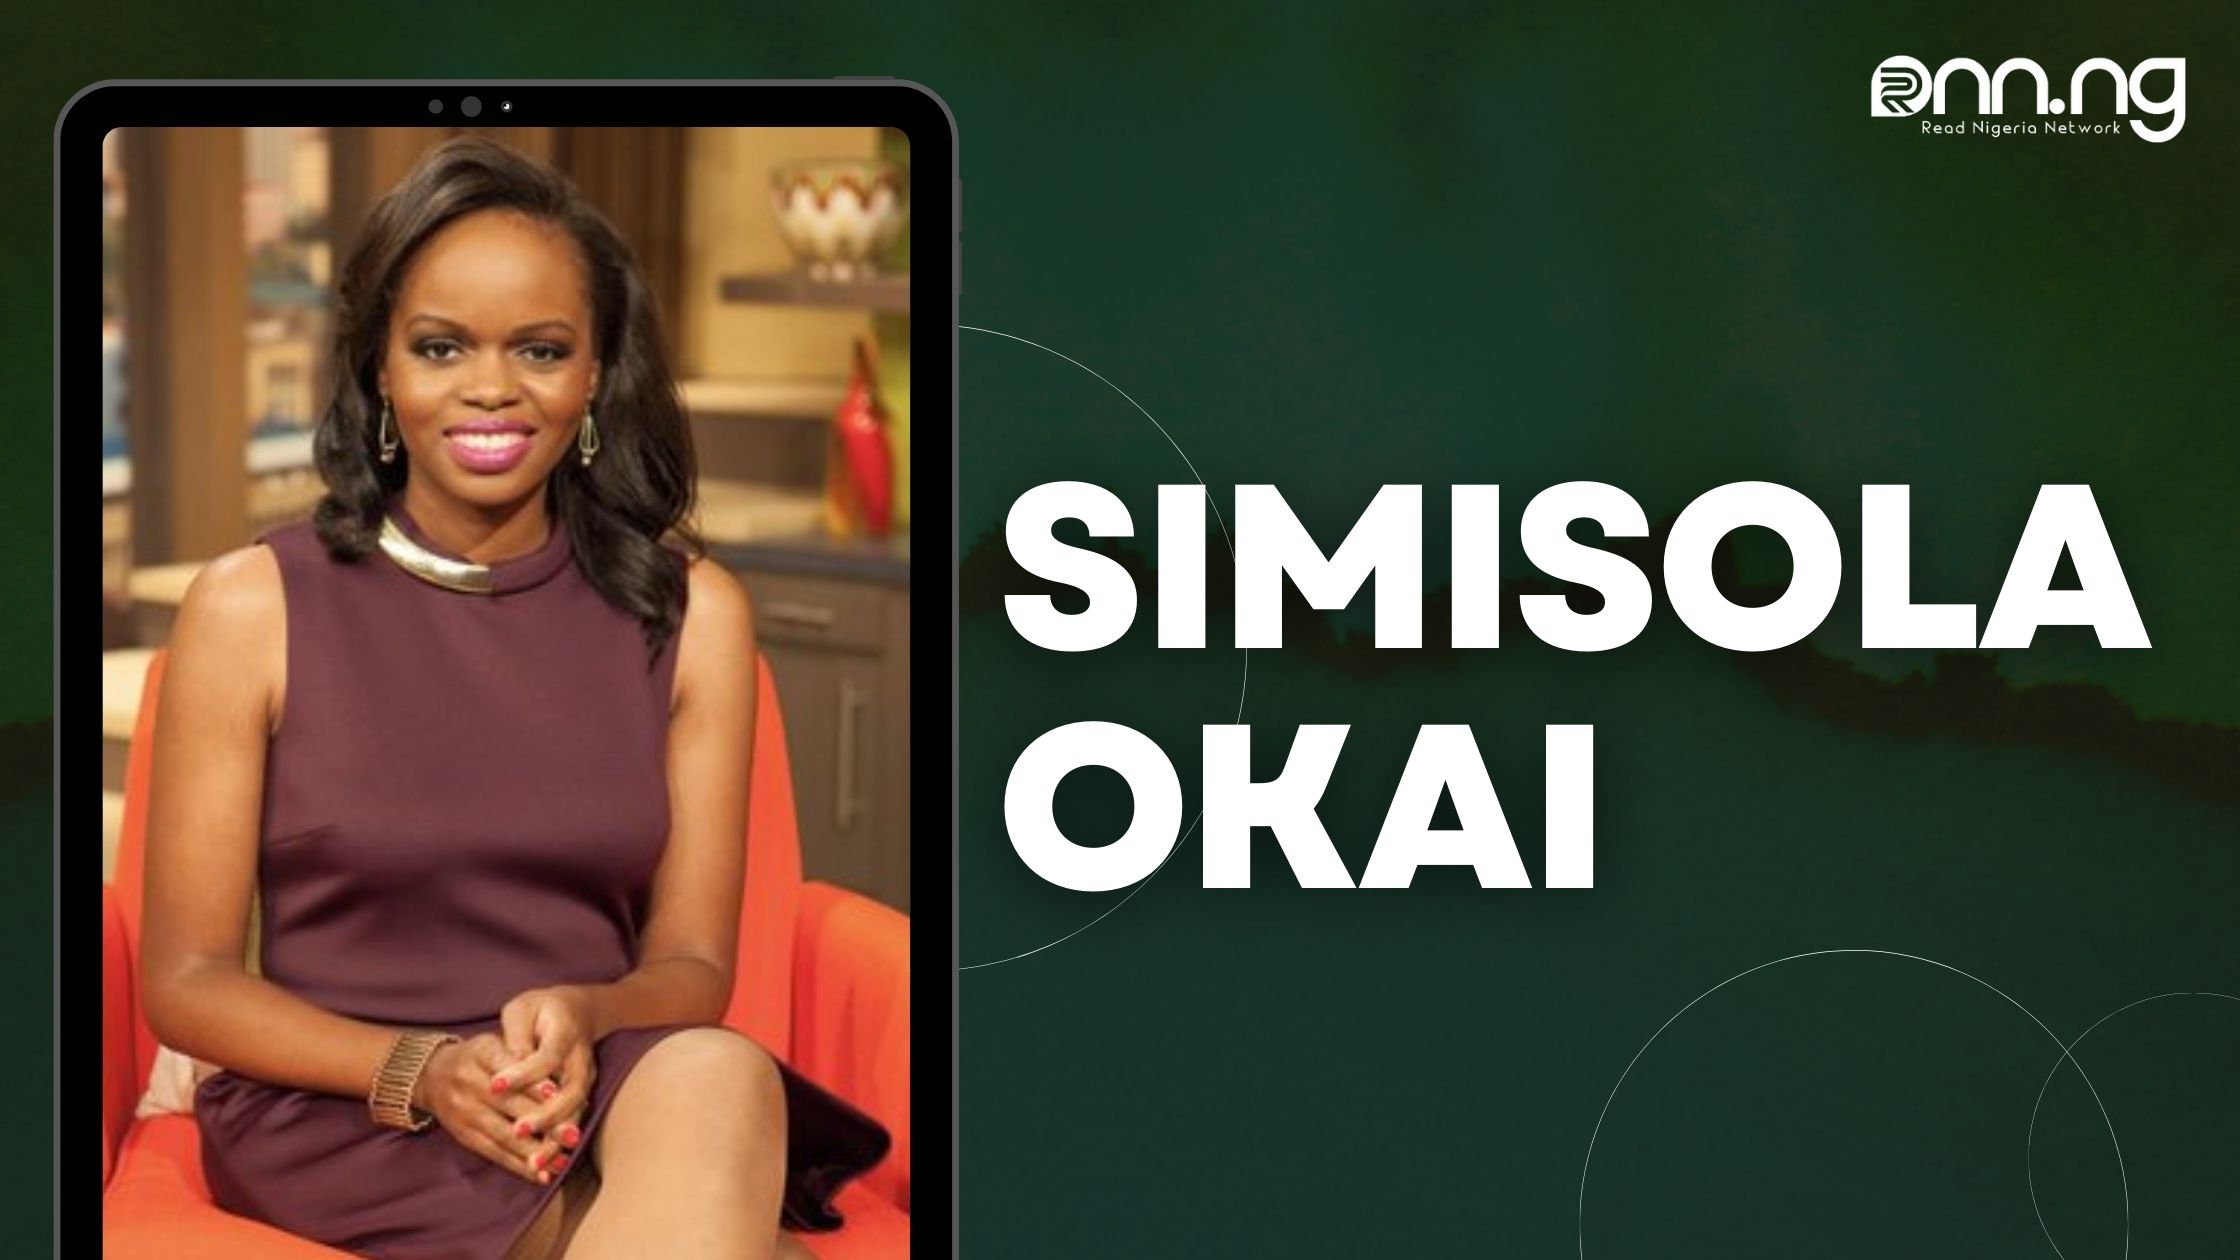 Meet Simisola Okai: A Dynamic Nigerian-Australian TV Host